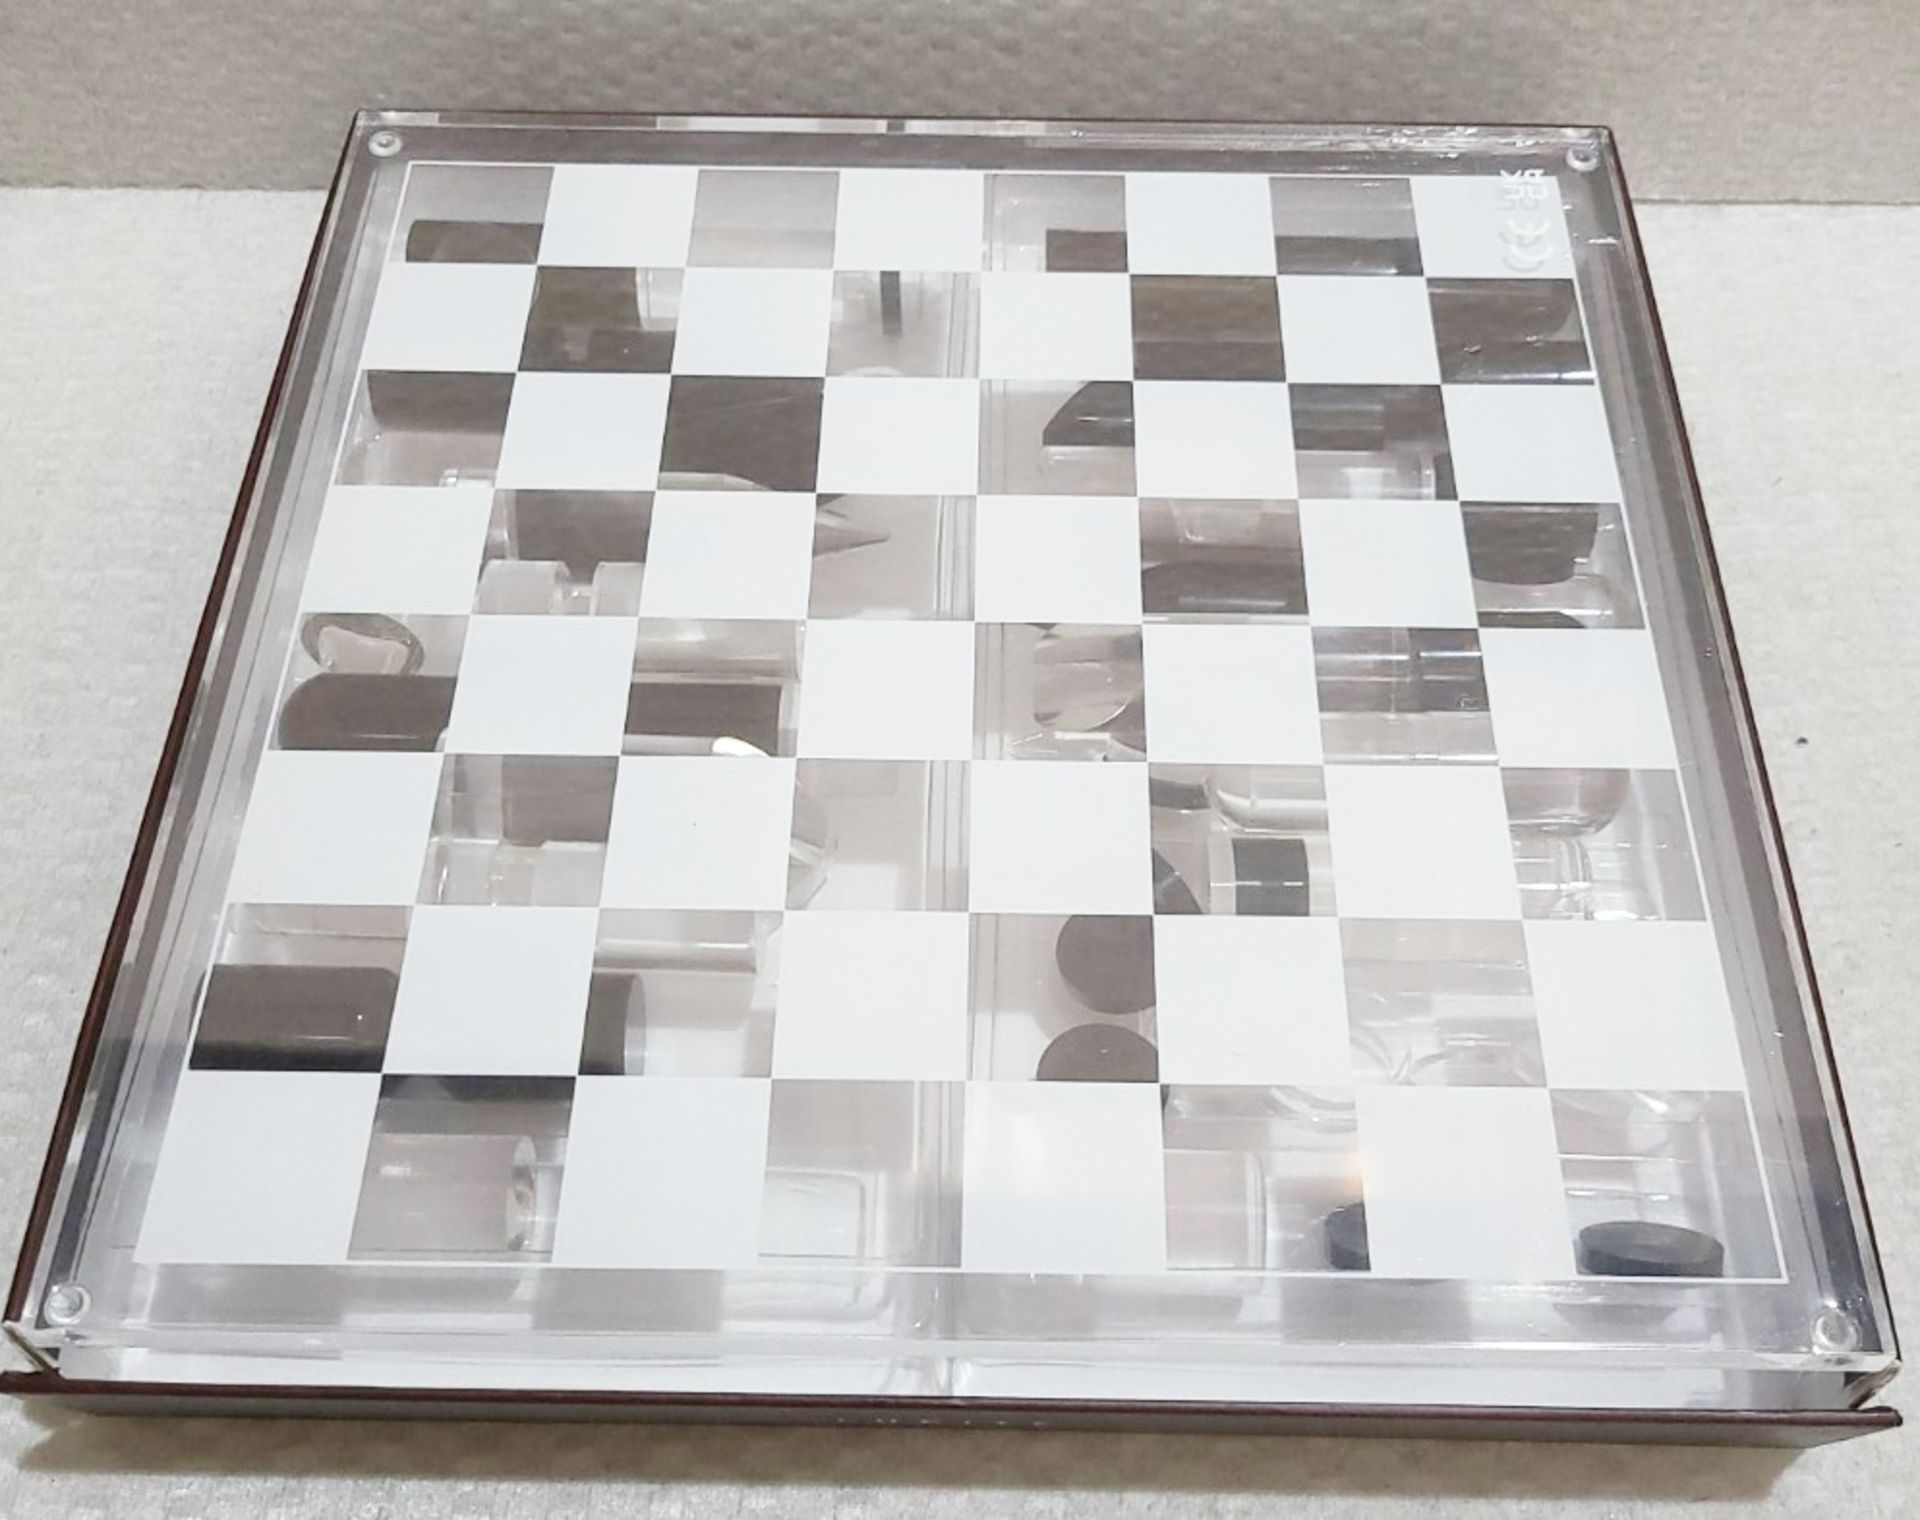 1 x SUNNYLIFE KIDS Lucite Chess & Checkers Set - Original Price £170.00 - Image 4 of 6